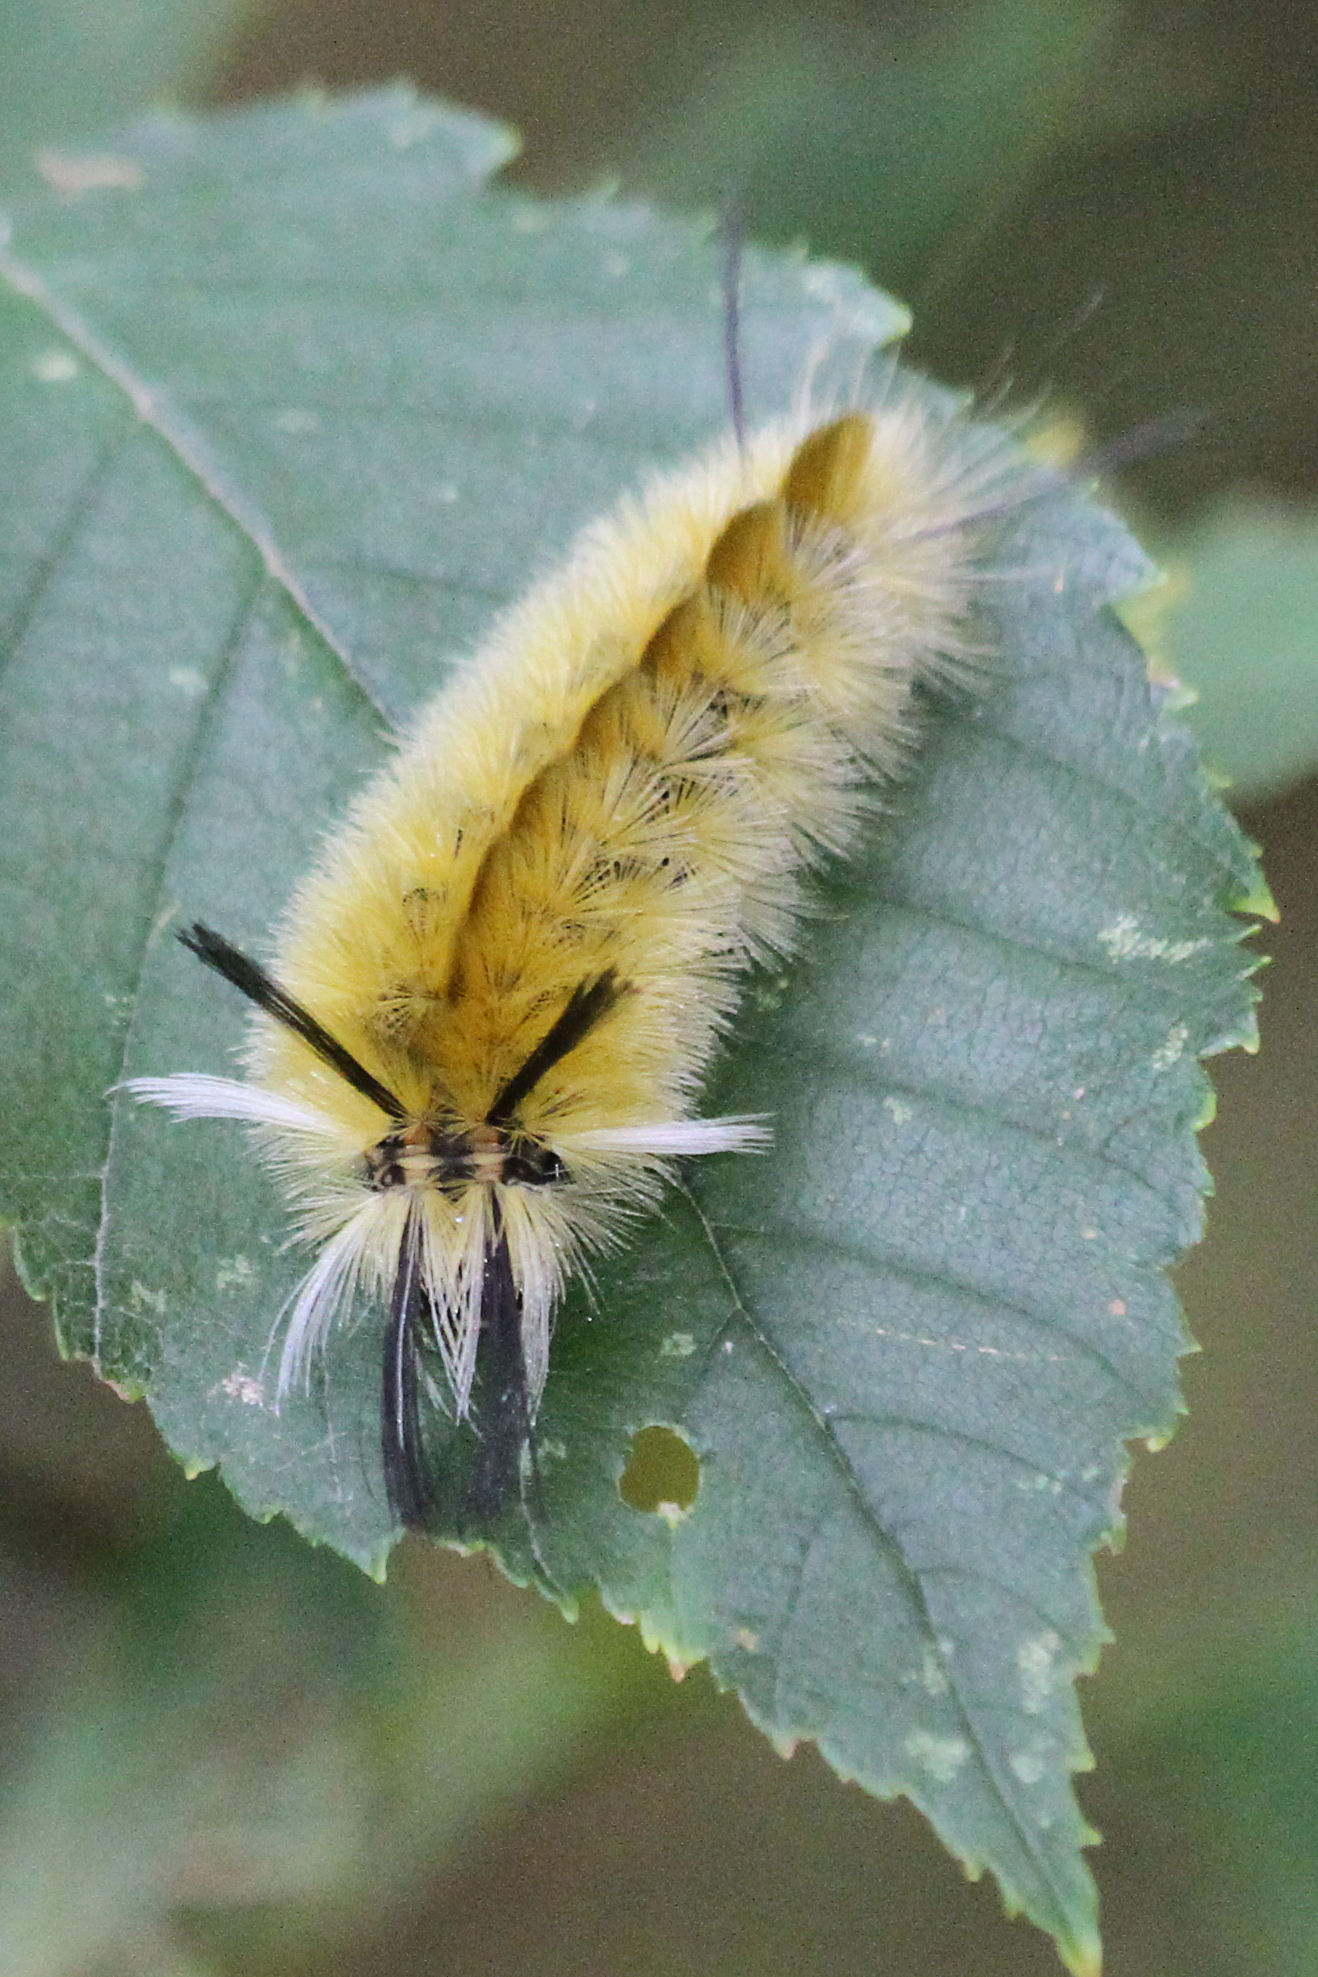 Banded Tussock Moth caterpillar - yellow.jpg